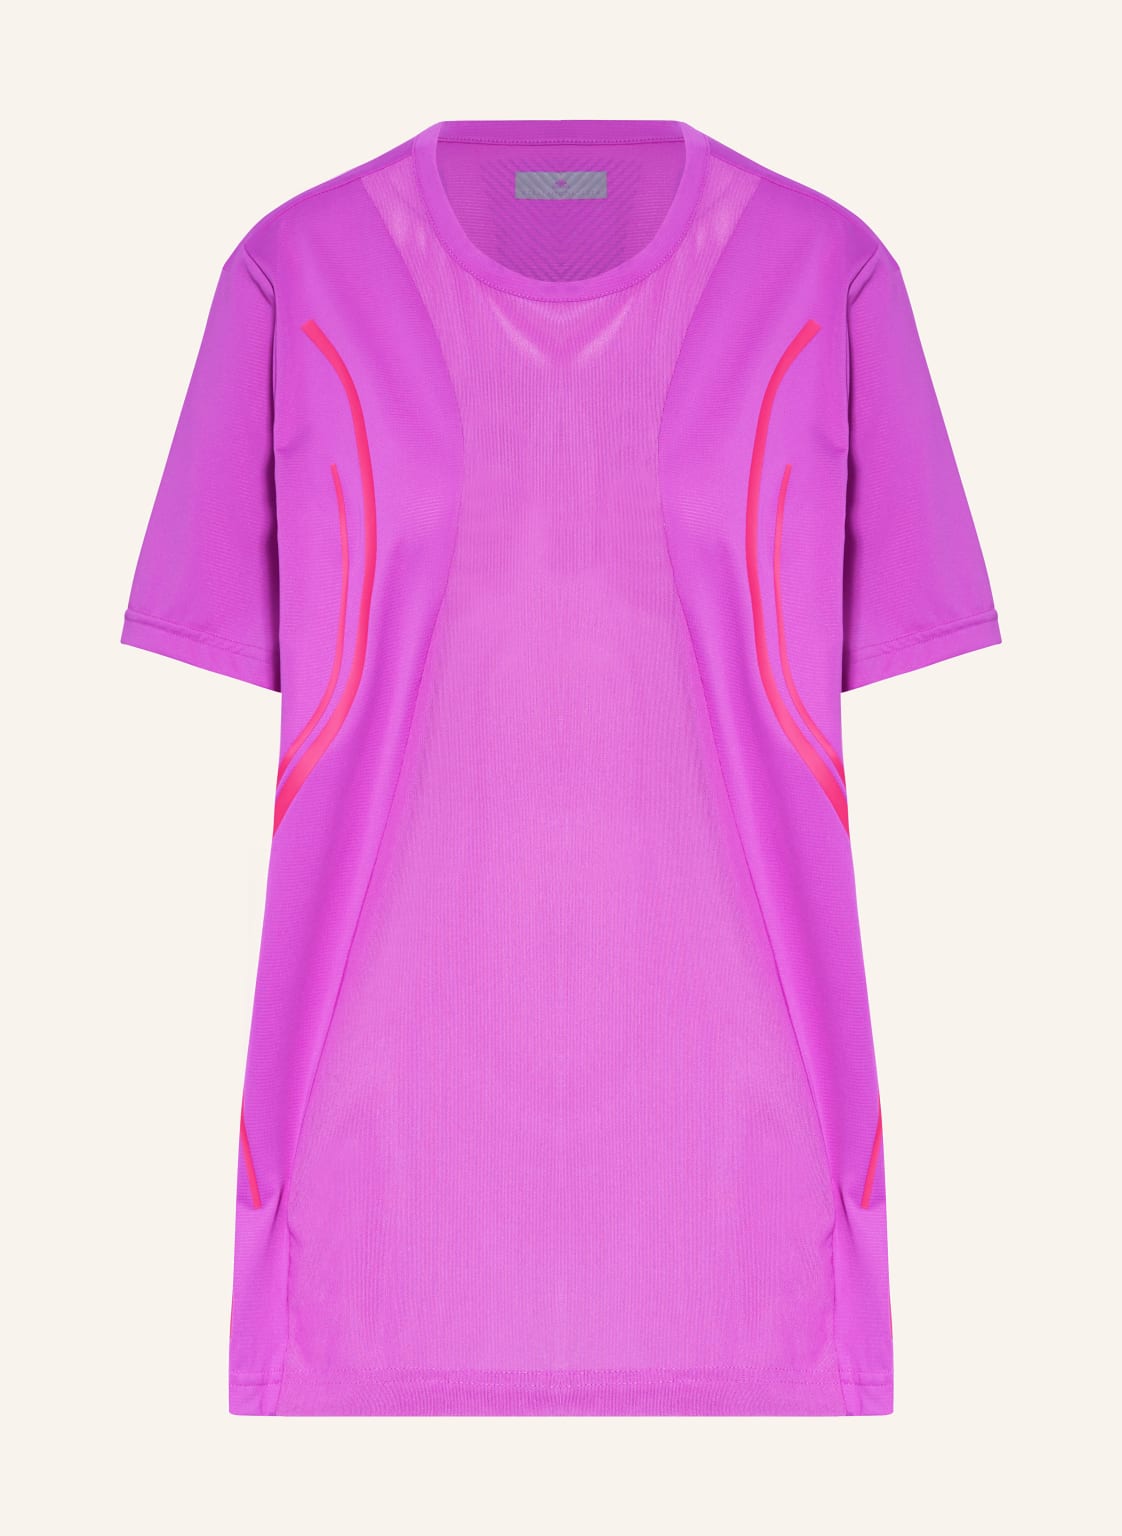 Adidas By Stella Mccartney T-Shirt Truepace pink von adidas by stella mccartney